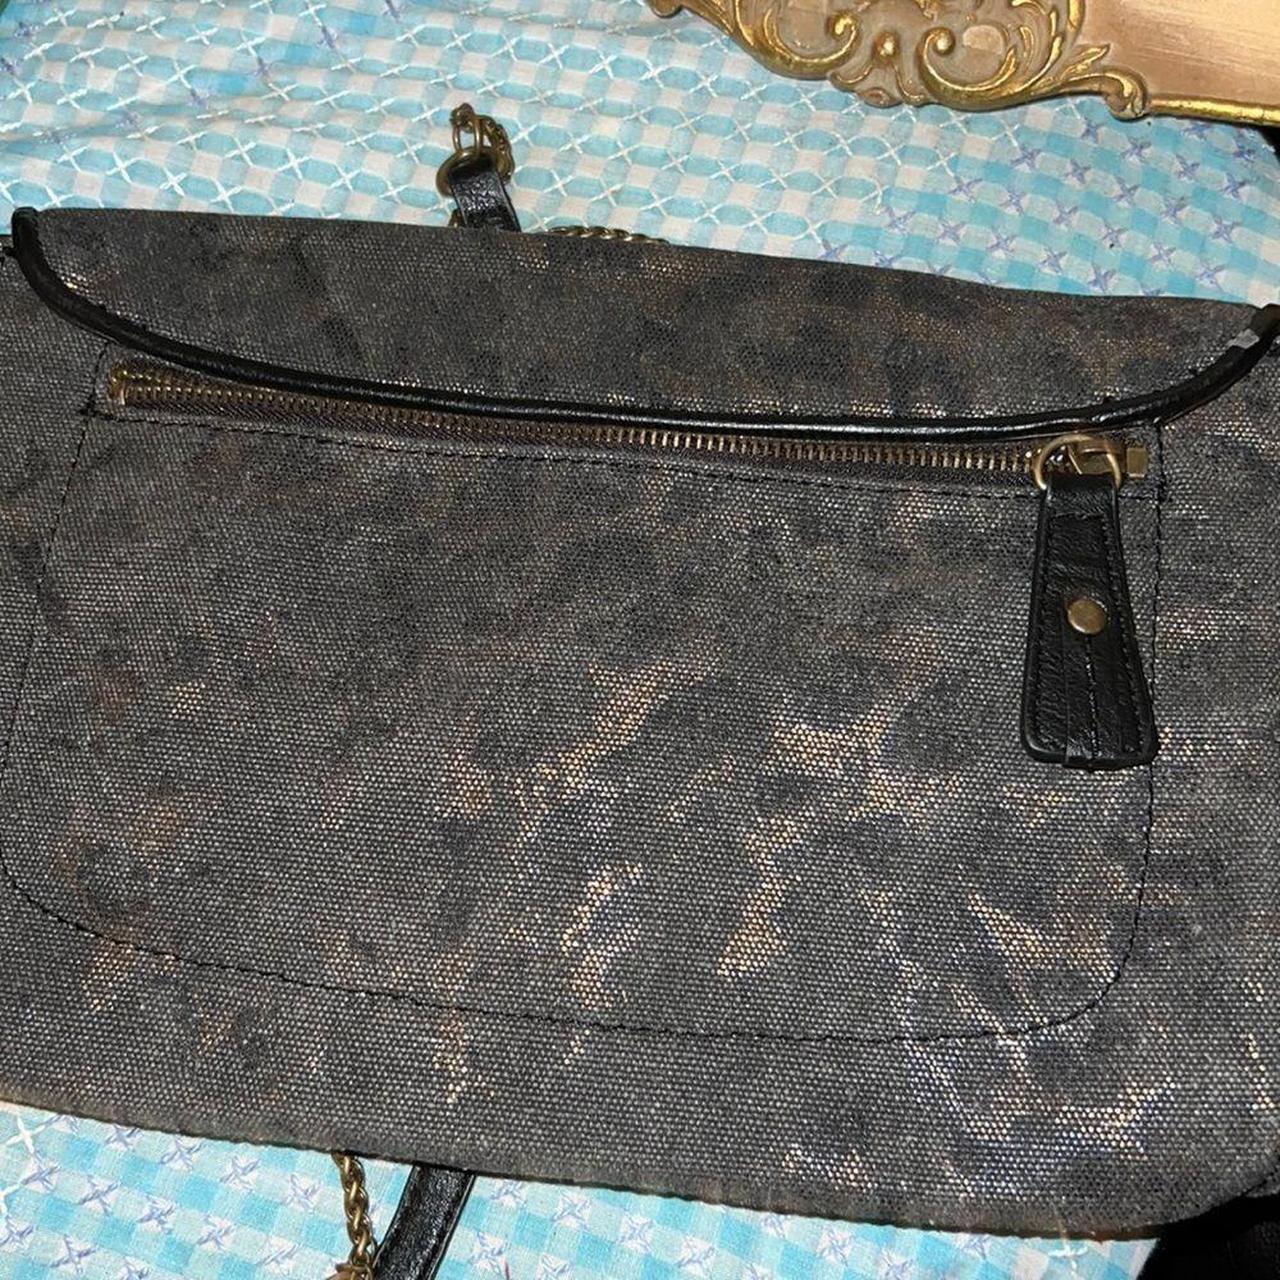 Jessica Simpson bag. In great condition! No returns - Depop